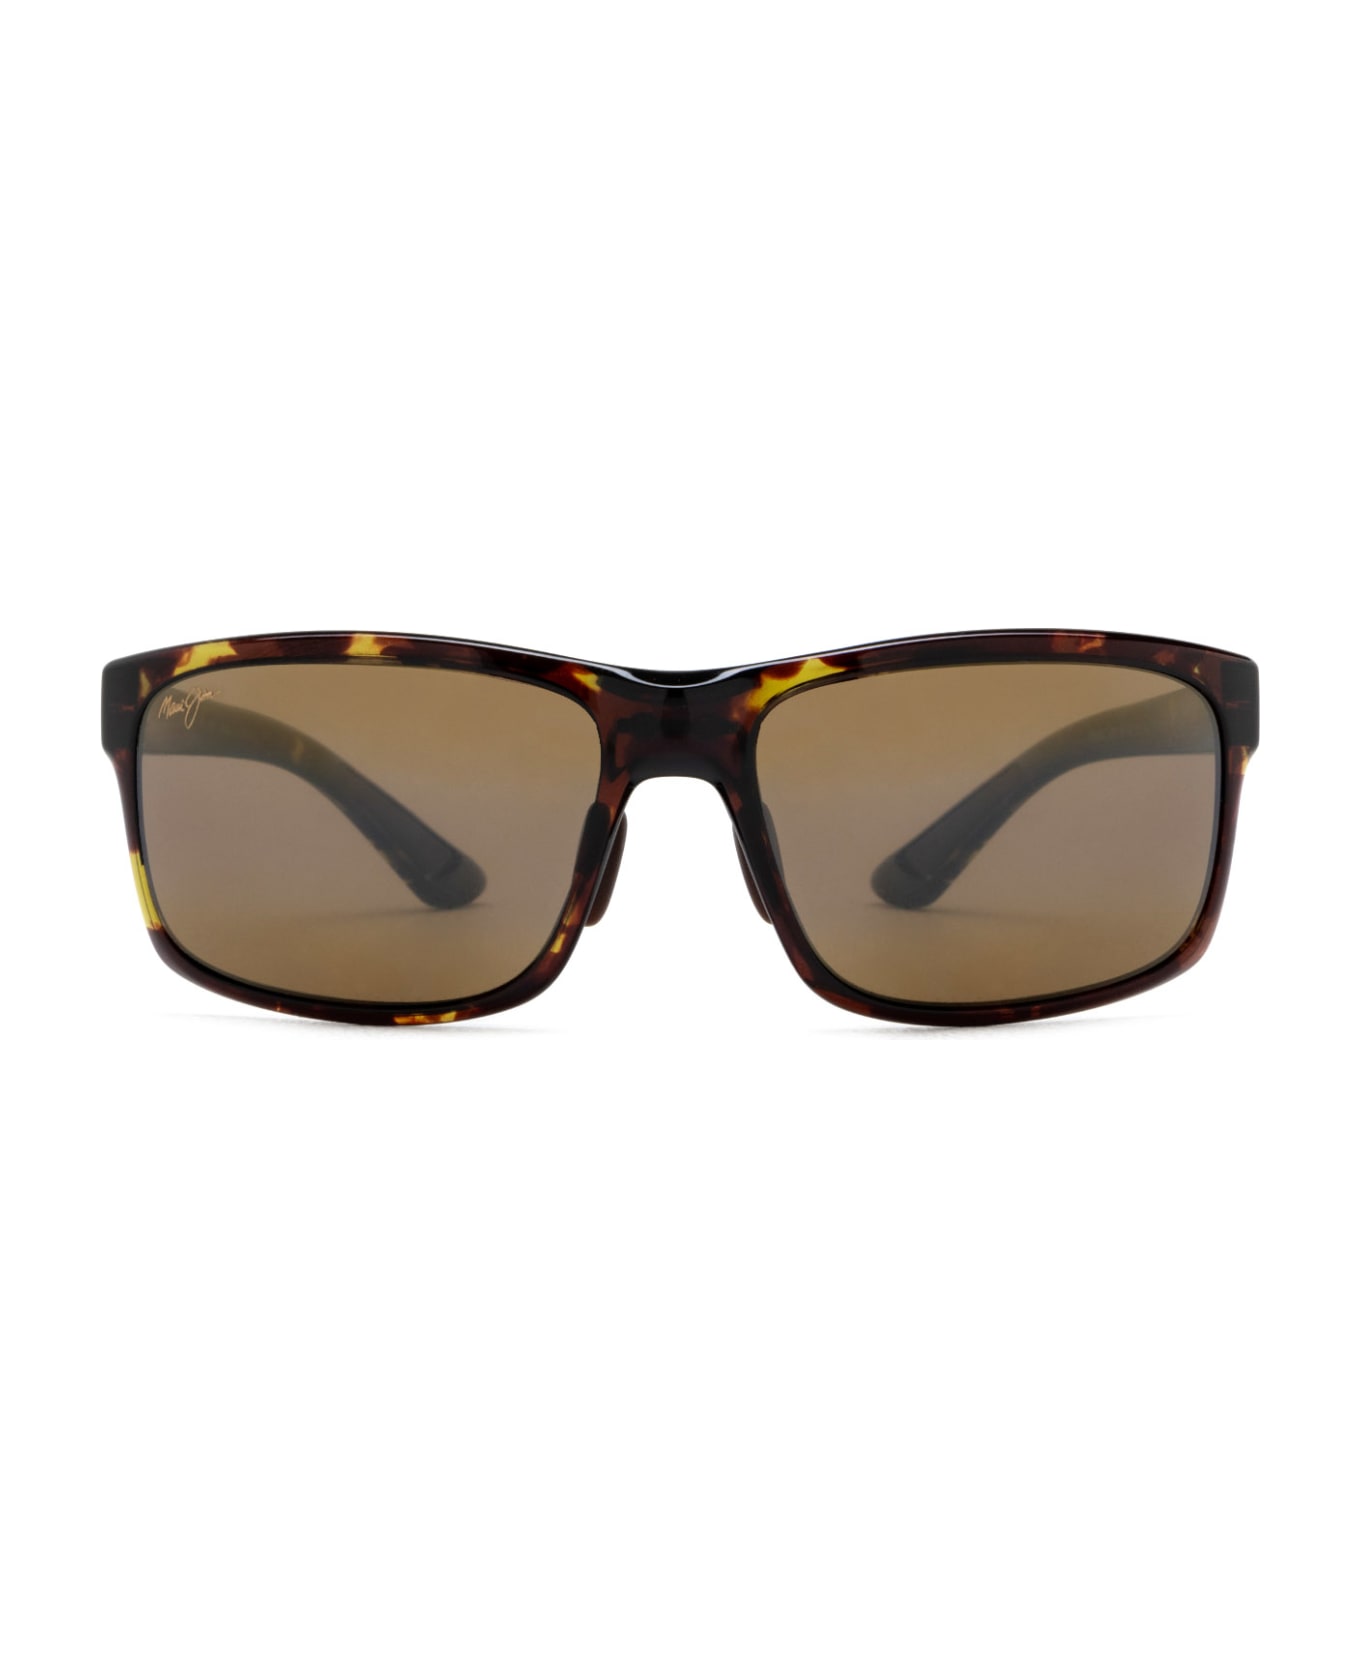 Maui Jim Mj439 Olive Tortoise Sunglasses - Olive Tortoise